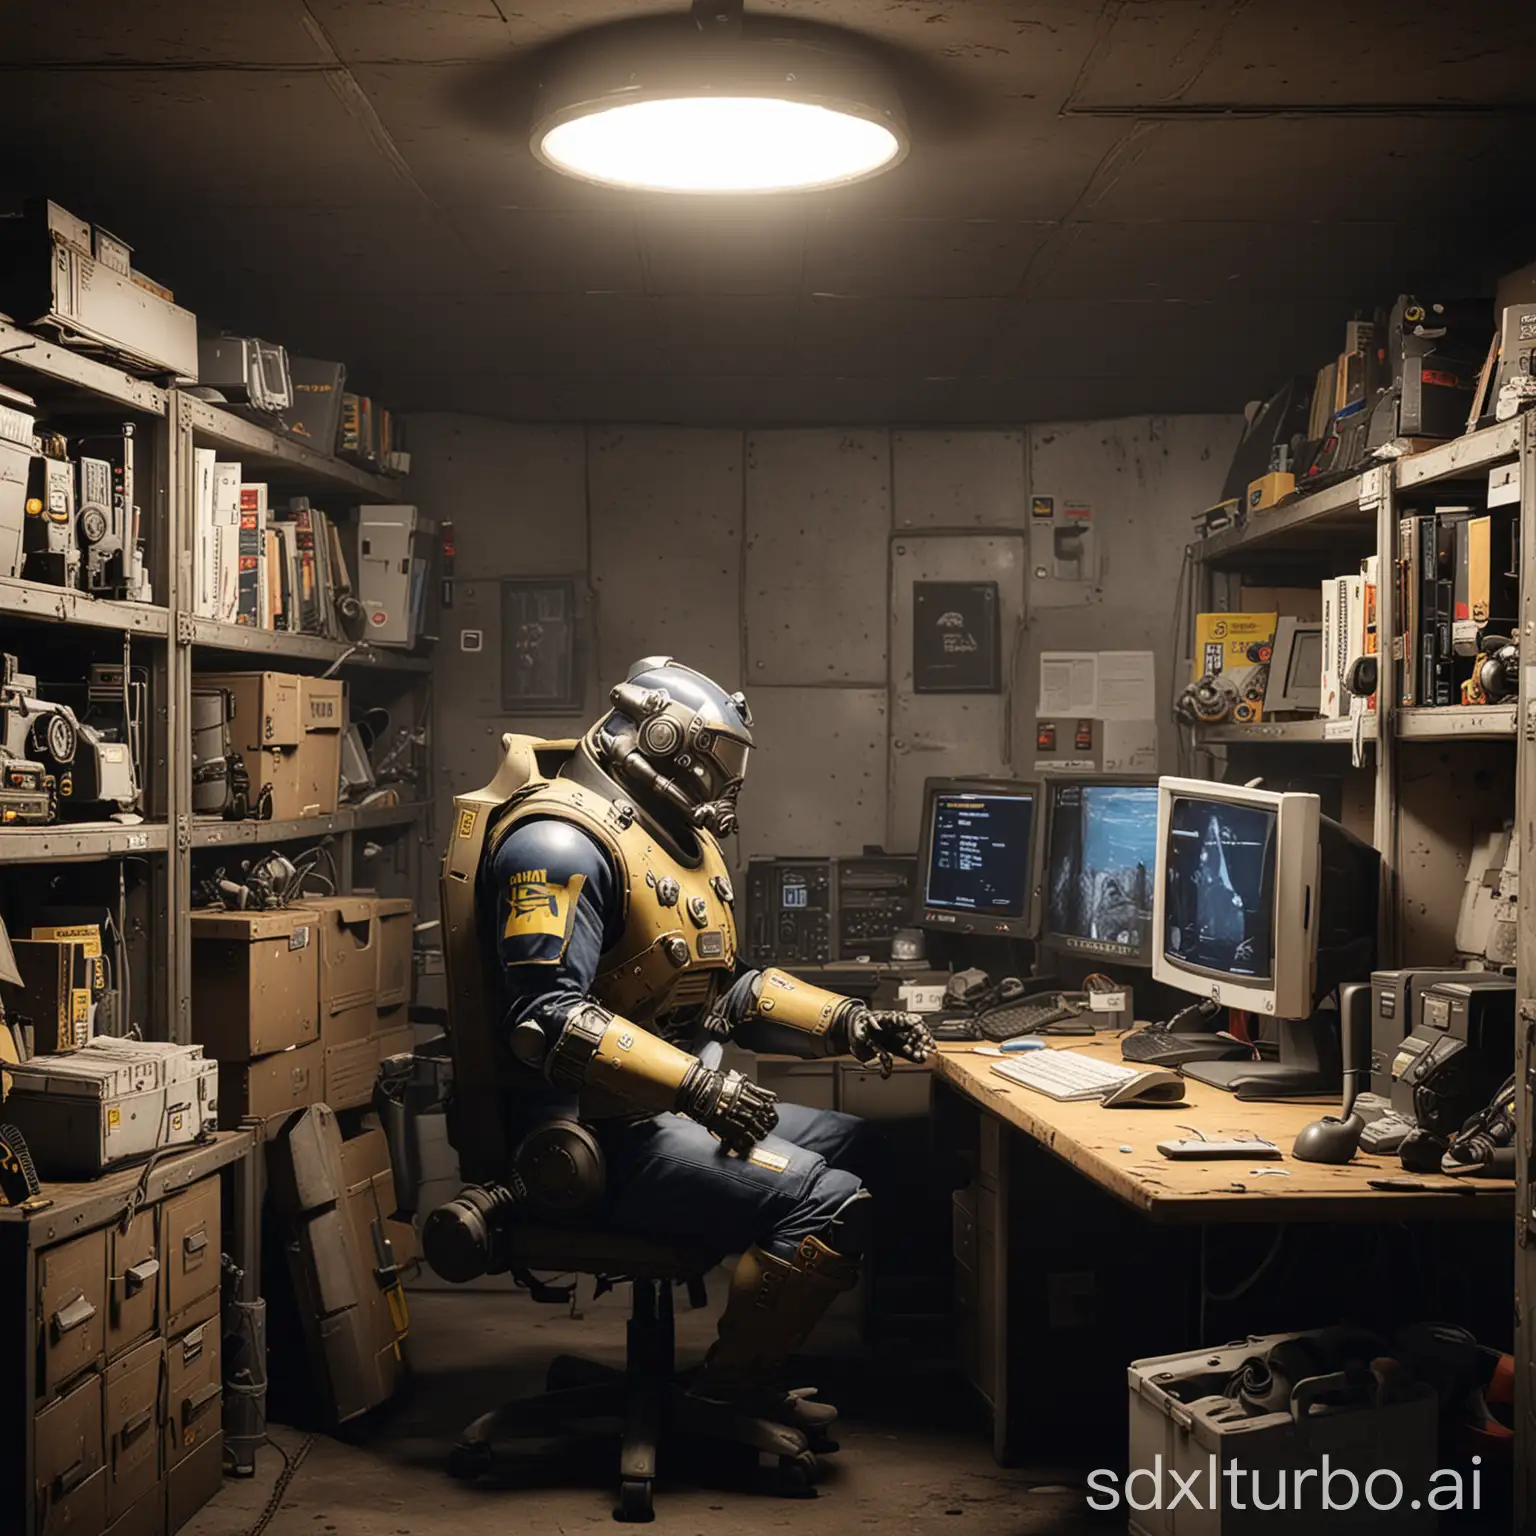 IKEA-Employee-in-Fallout-76-Bunker-Crafting-in-Power-Armor